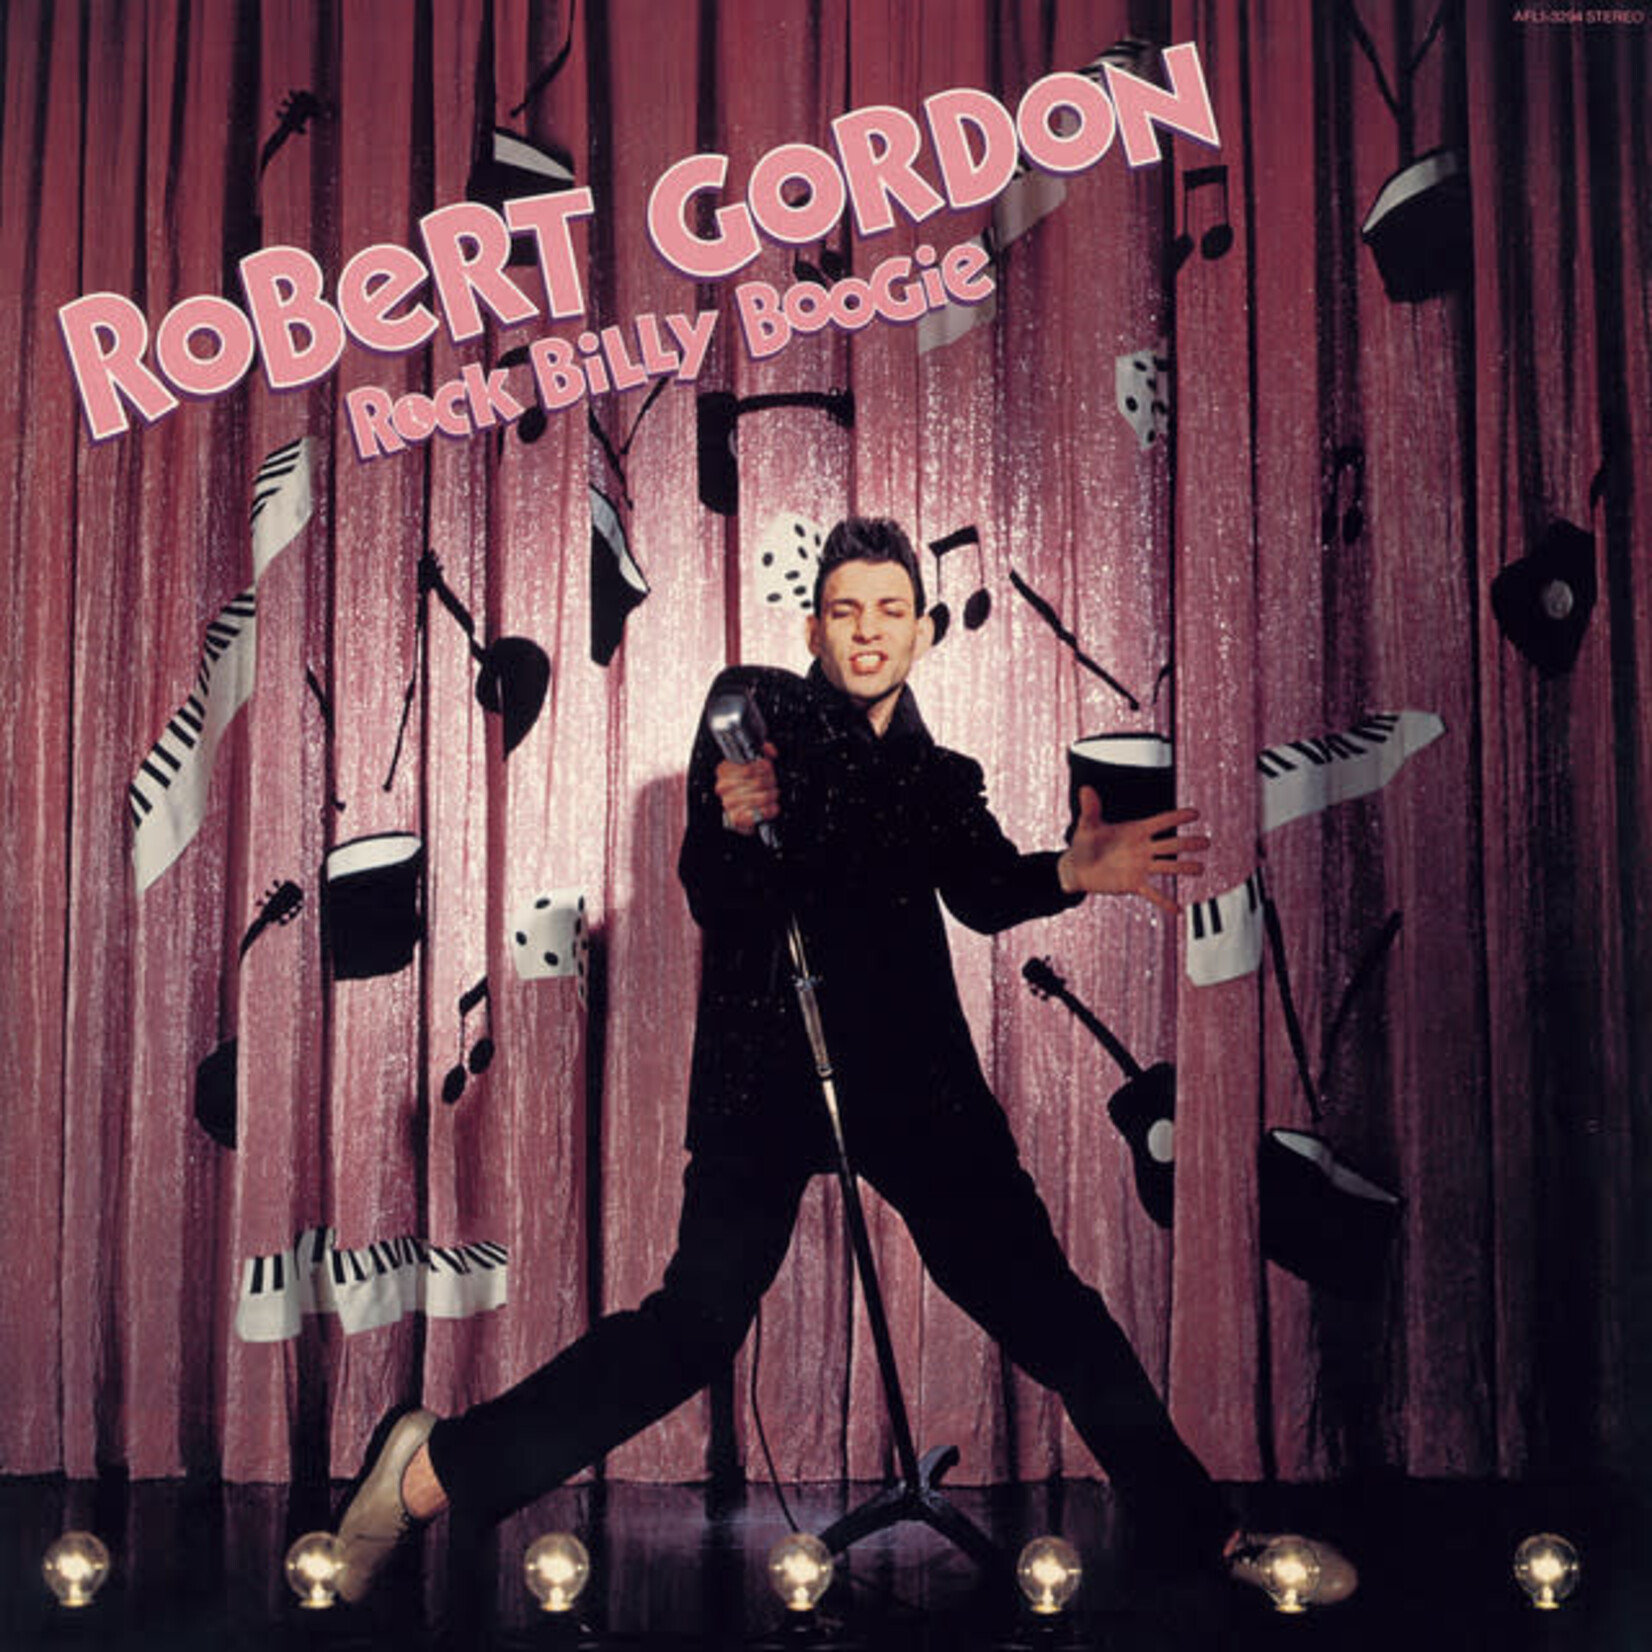 [Vintage] Robert Gordon - Rock Billy Boogie